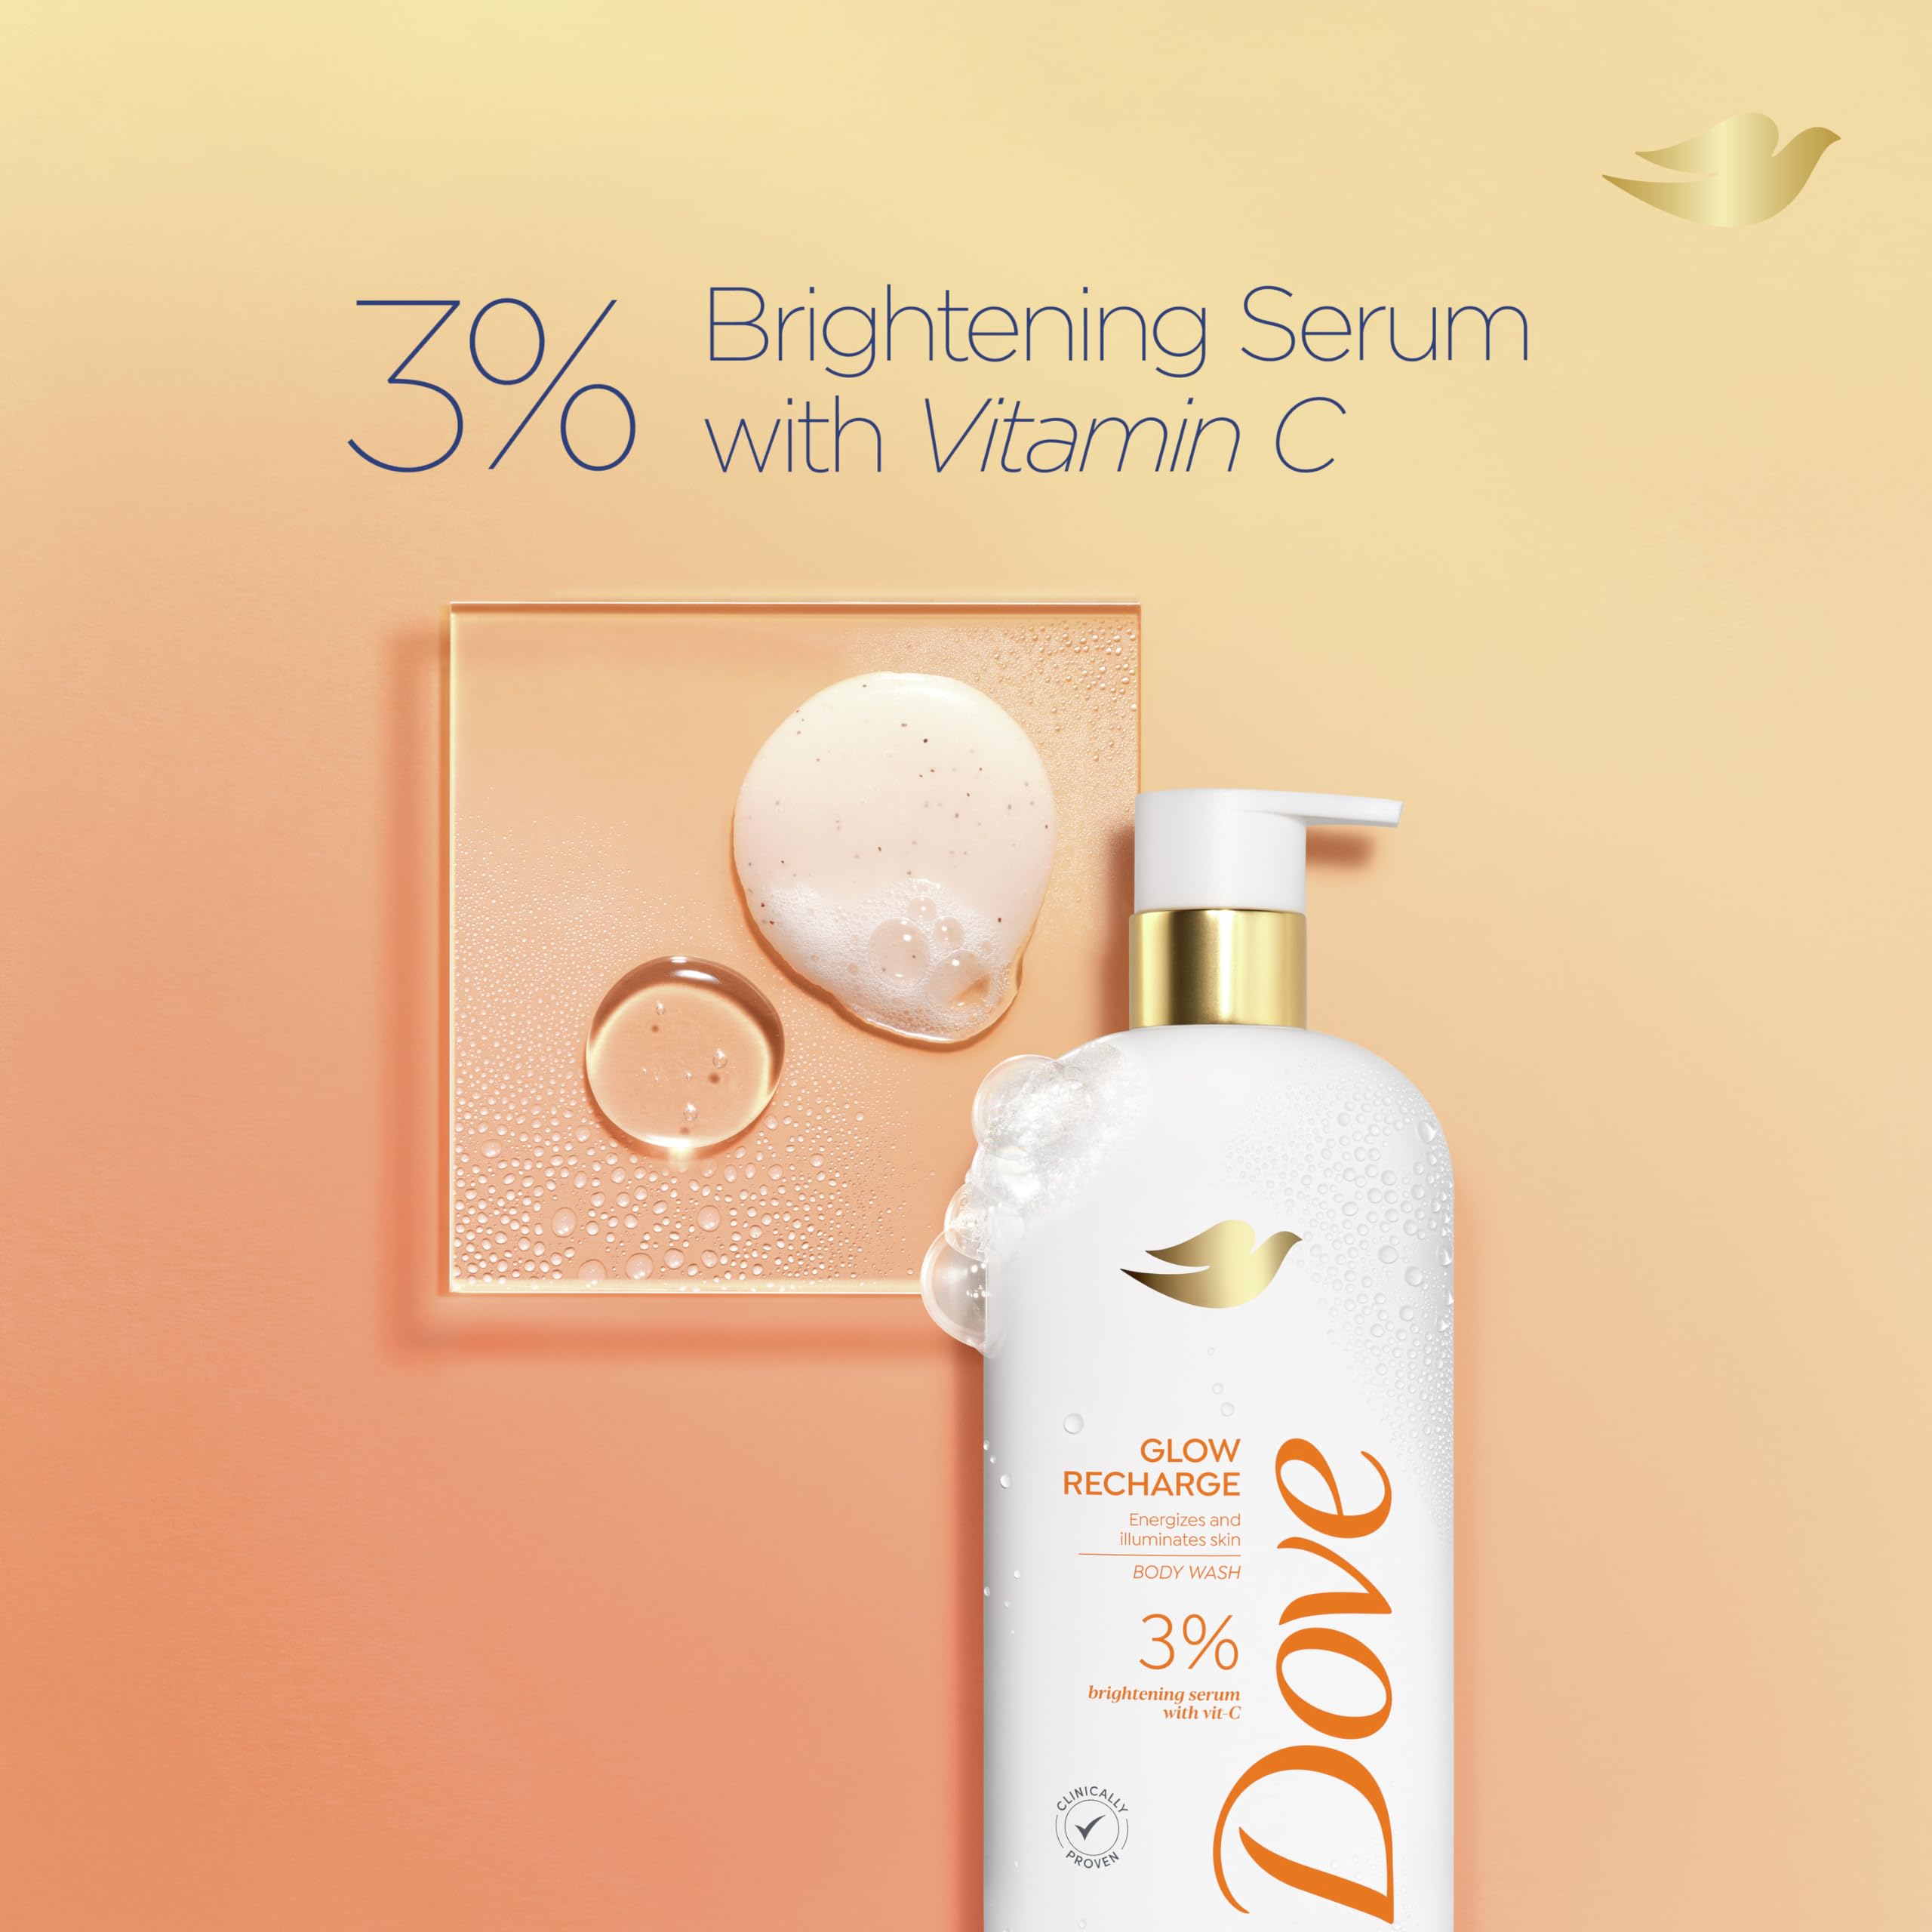 Dove Exfoliating Body Wash Glow Recharge Energizes & illuminates skin 3% brightening serum with vitamin C 18.5 oz